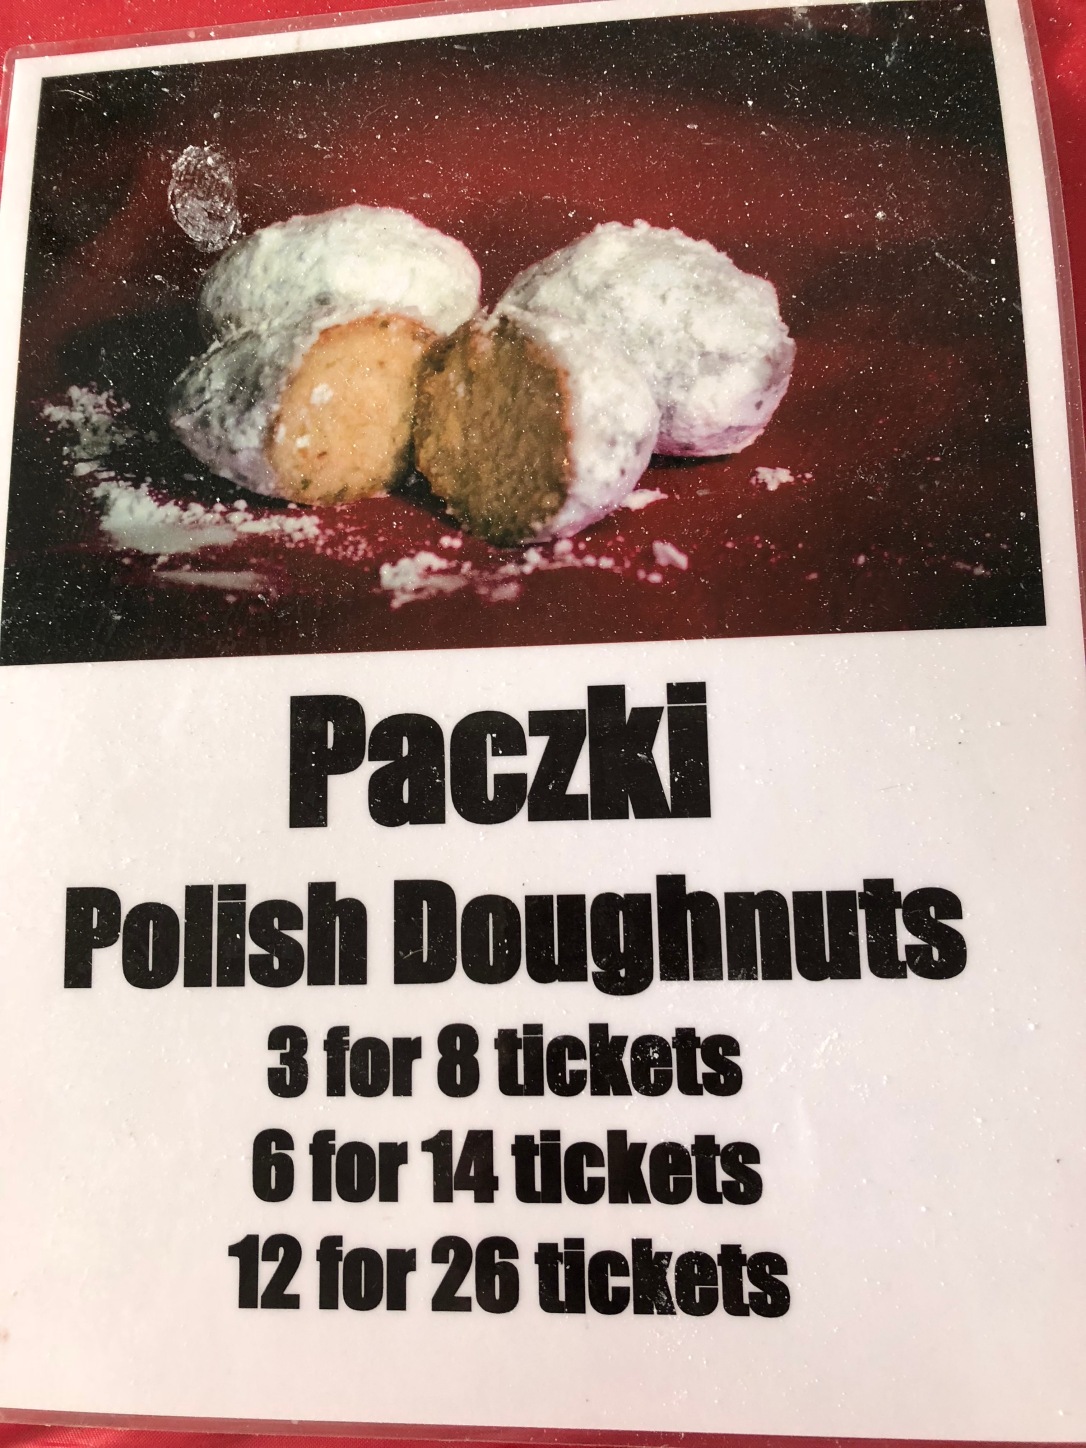 Paczki Polish Doughnut Sign